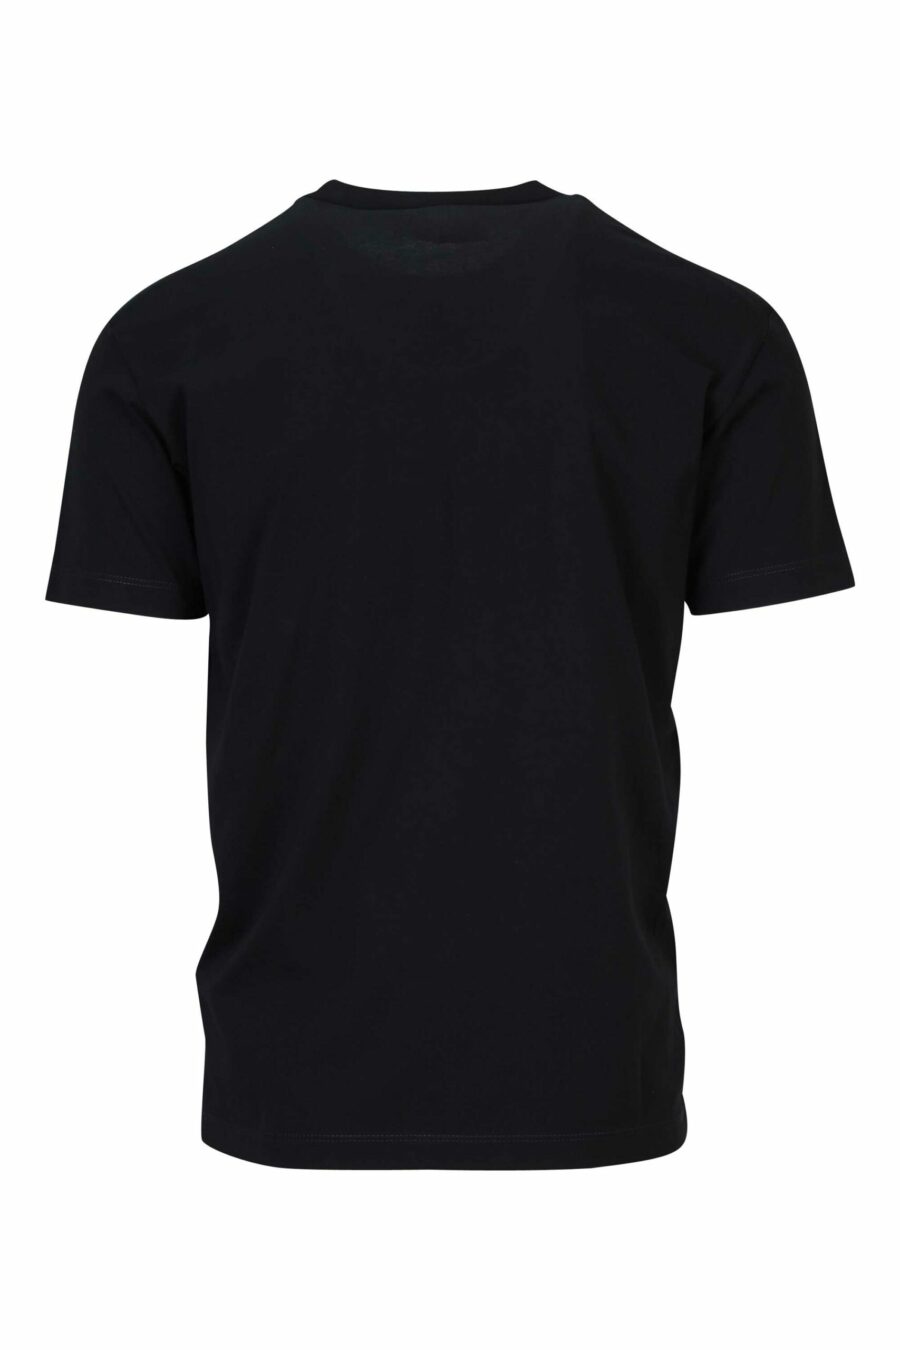 Camiseta negra con maxilogo "top" - 8054148570927 1 scaled